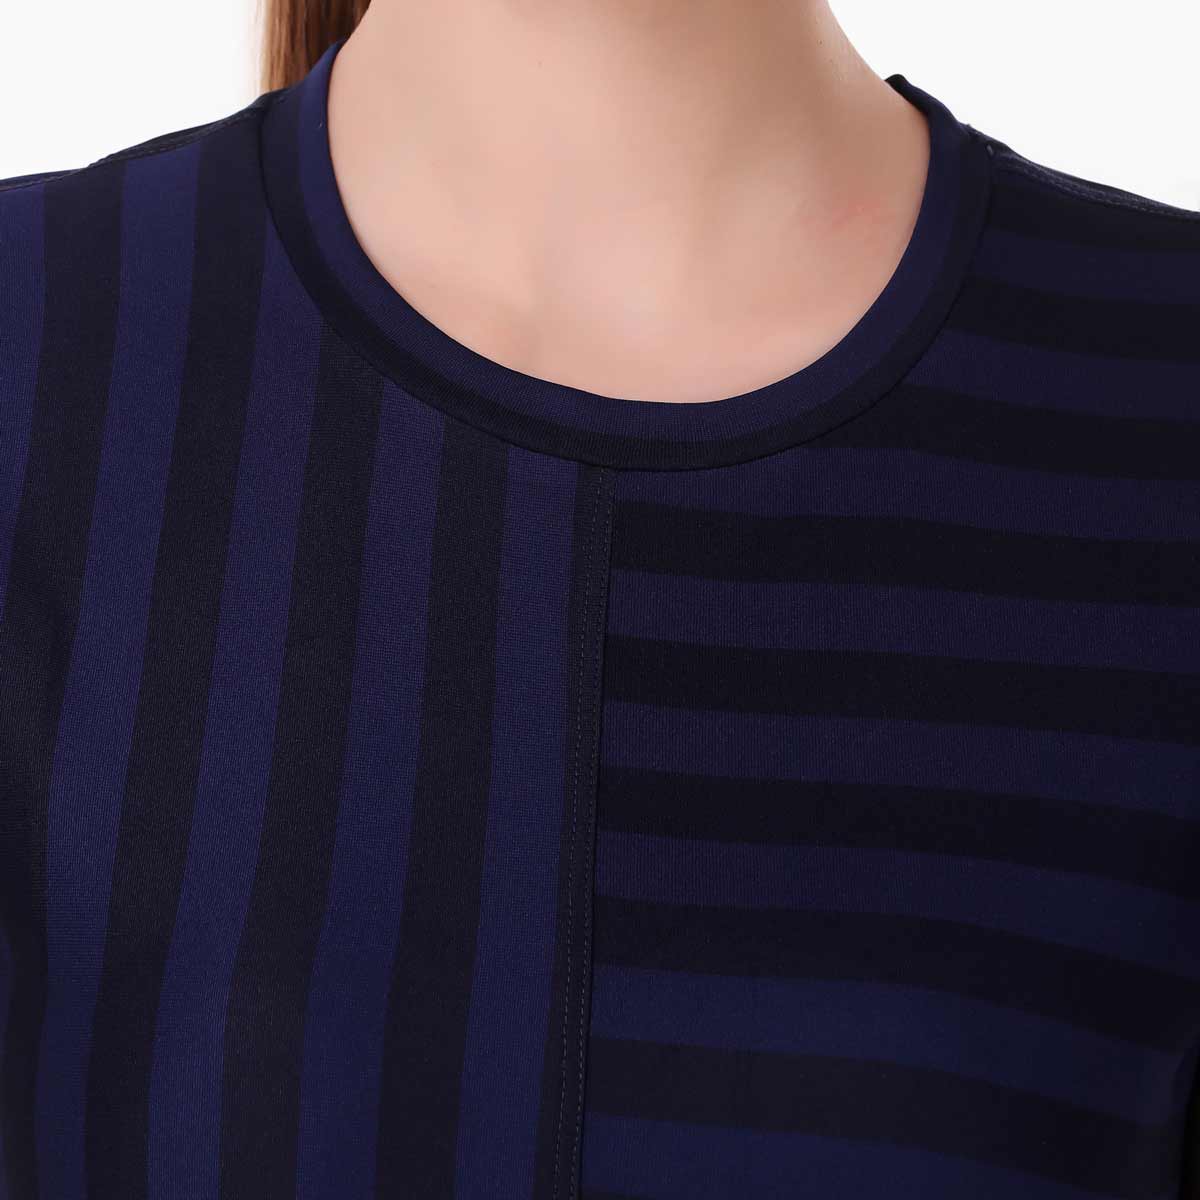 Cotton Stripes Tshirt For Women (Navy Blue)